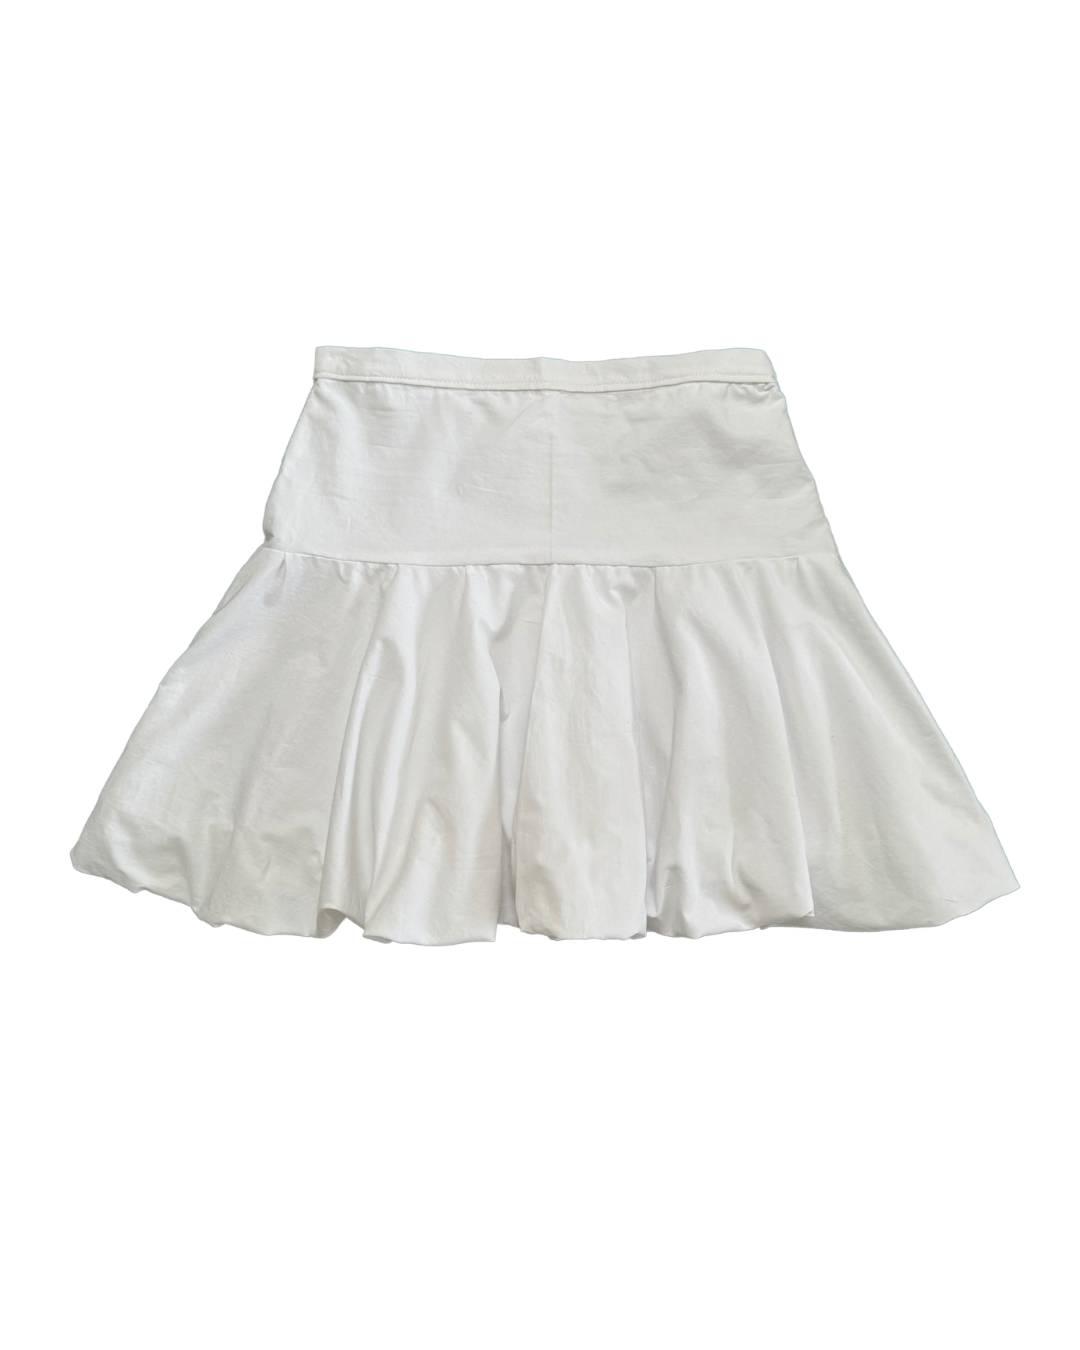 White bubble skirt